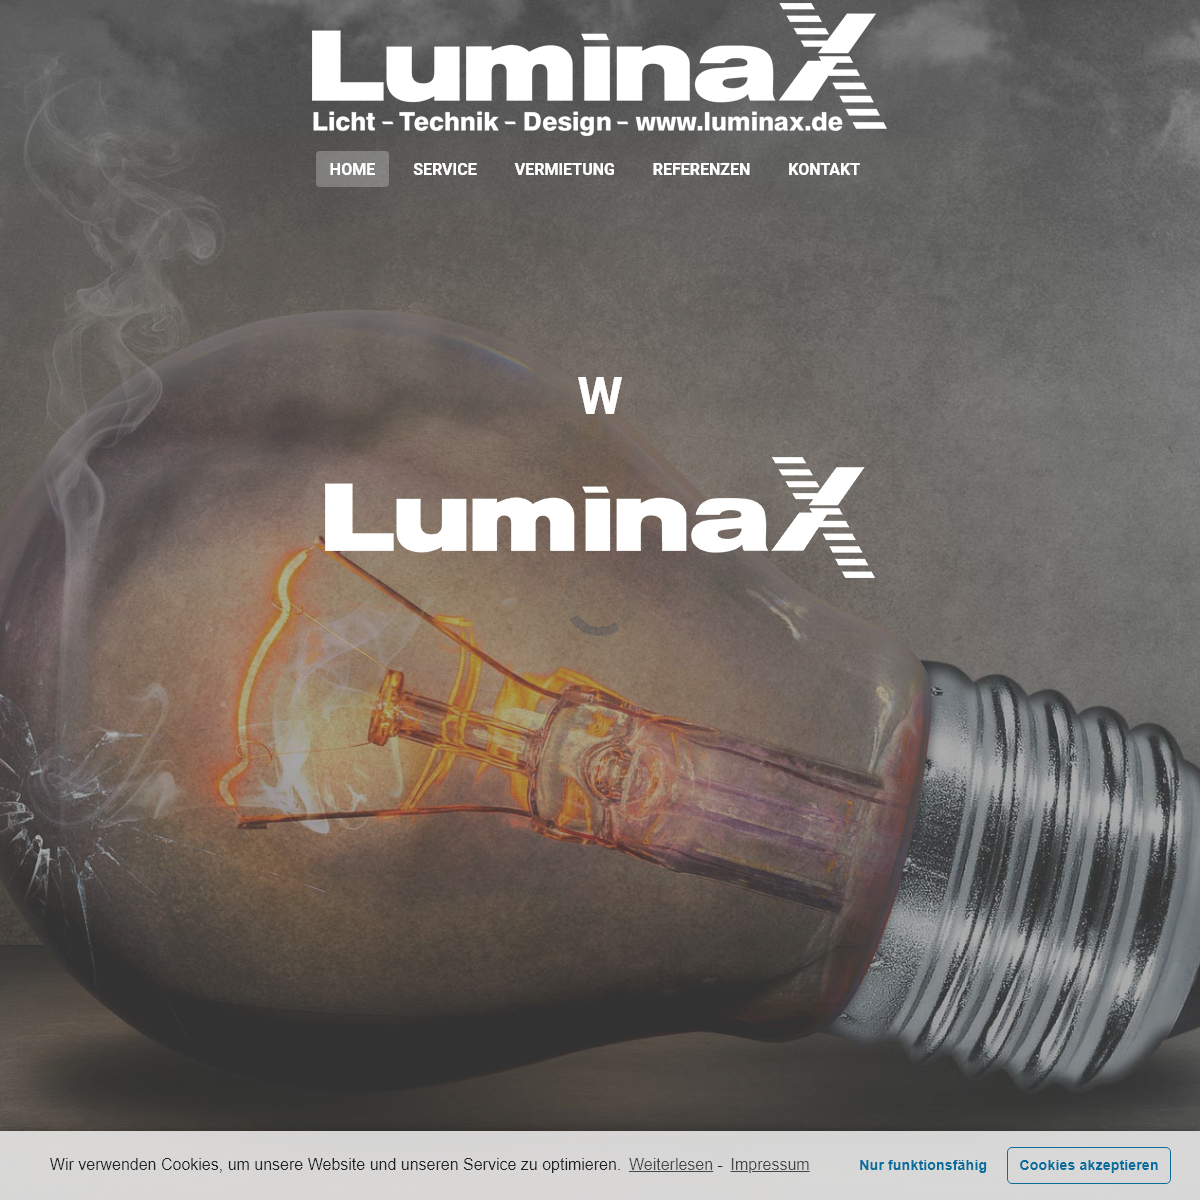 A complete backup of luminax.de